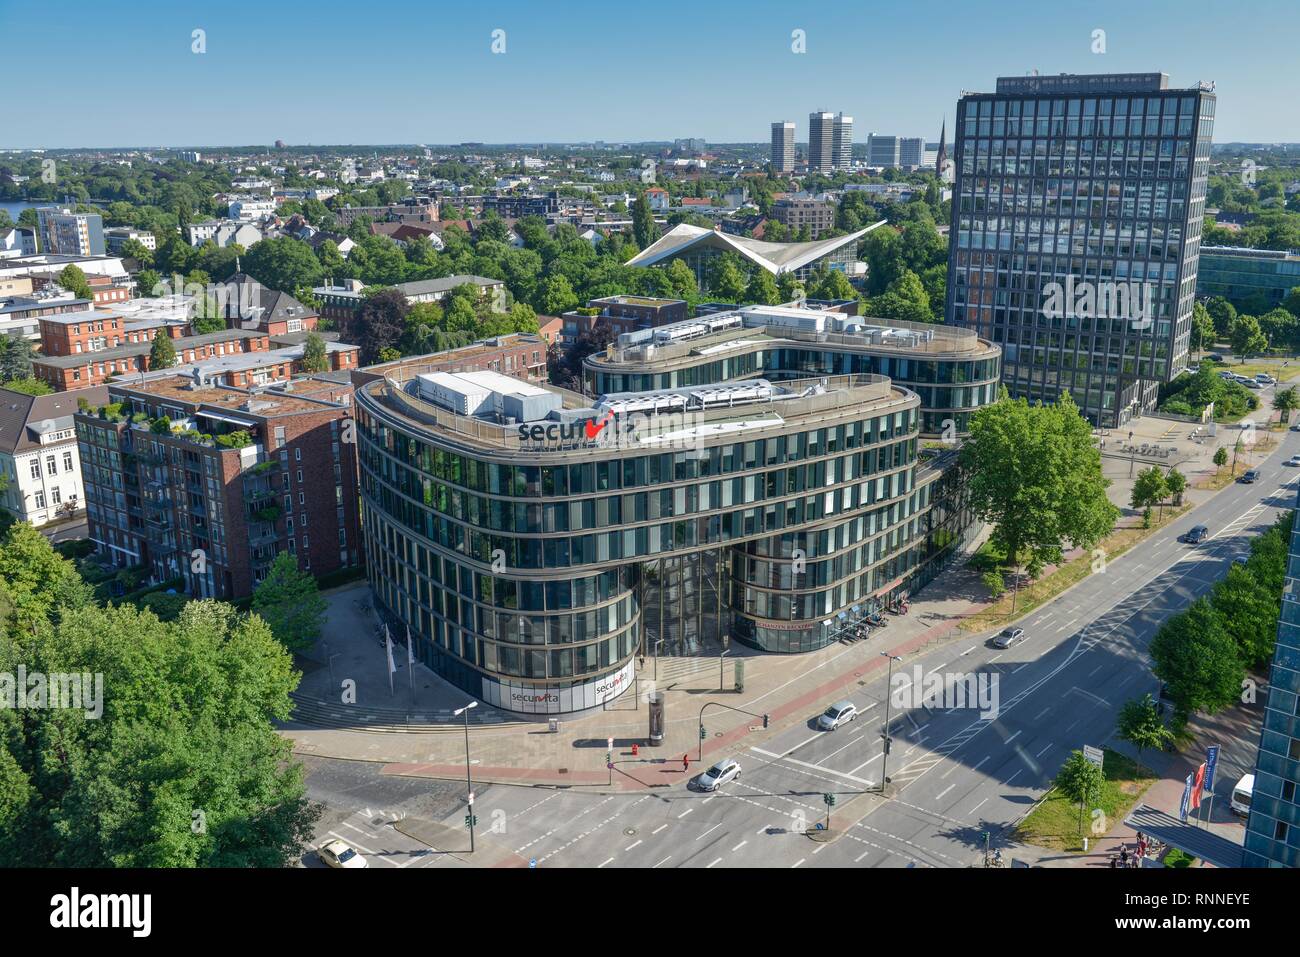 View of Securvita Krankenkasse building and surrounding area, Lübeckertordamm, Hamburg, Germany Stock Photo